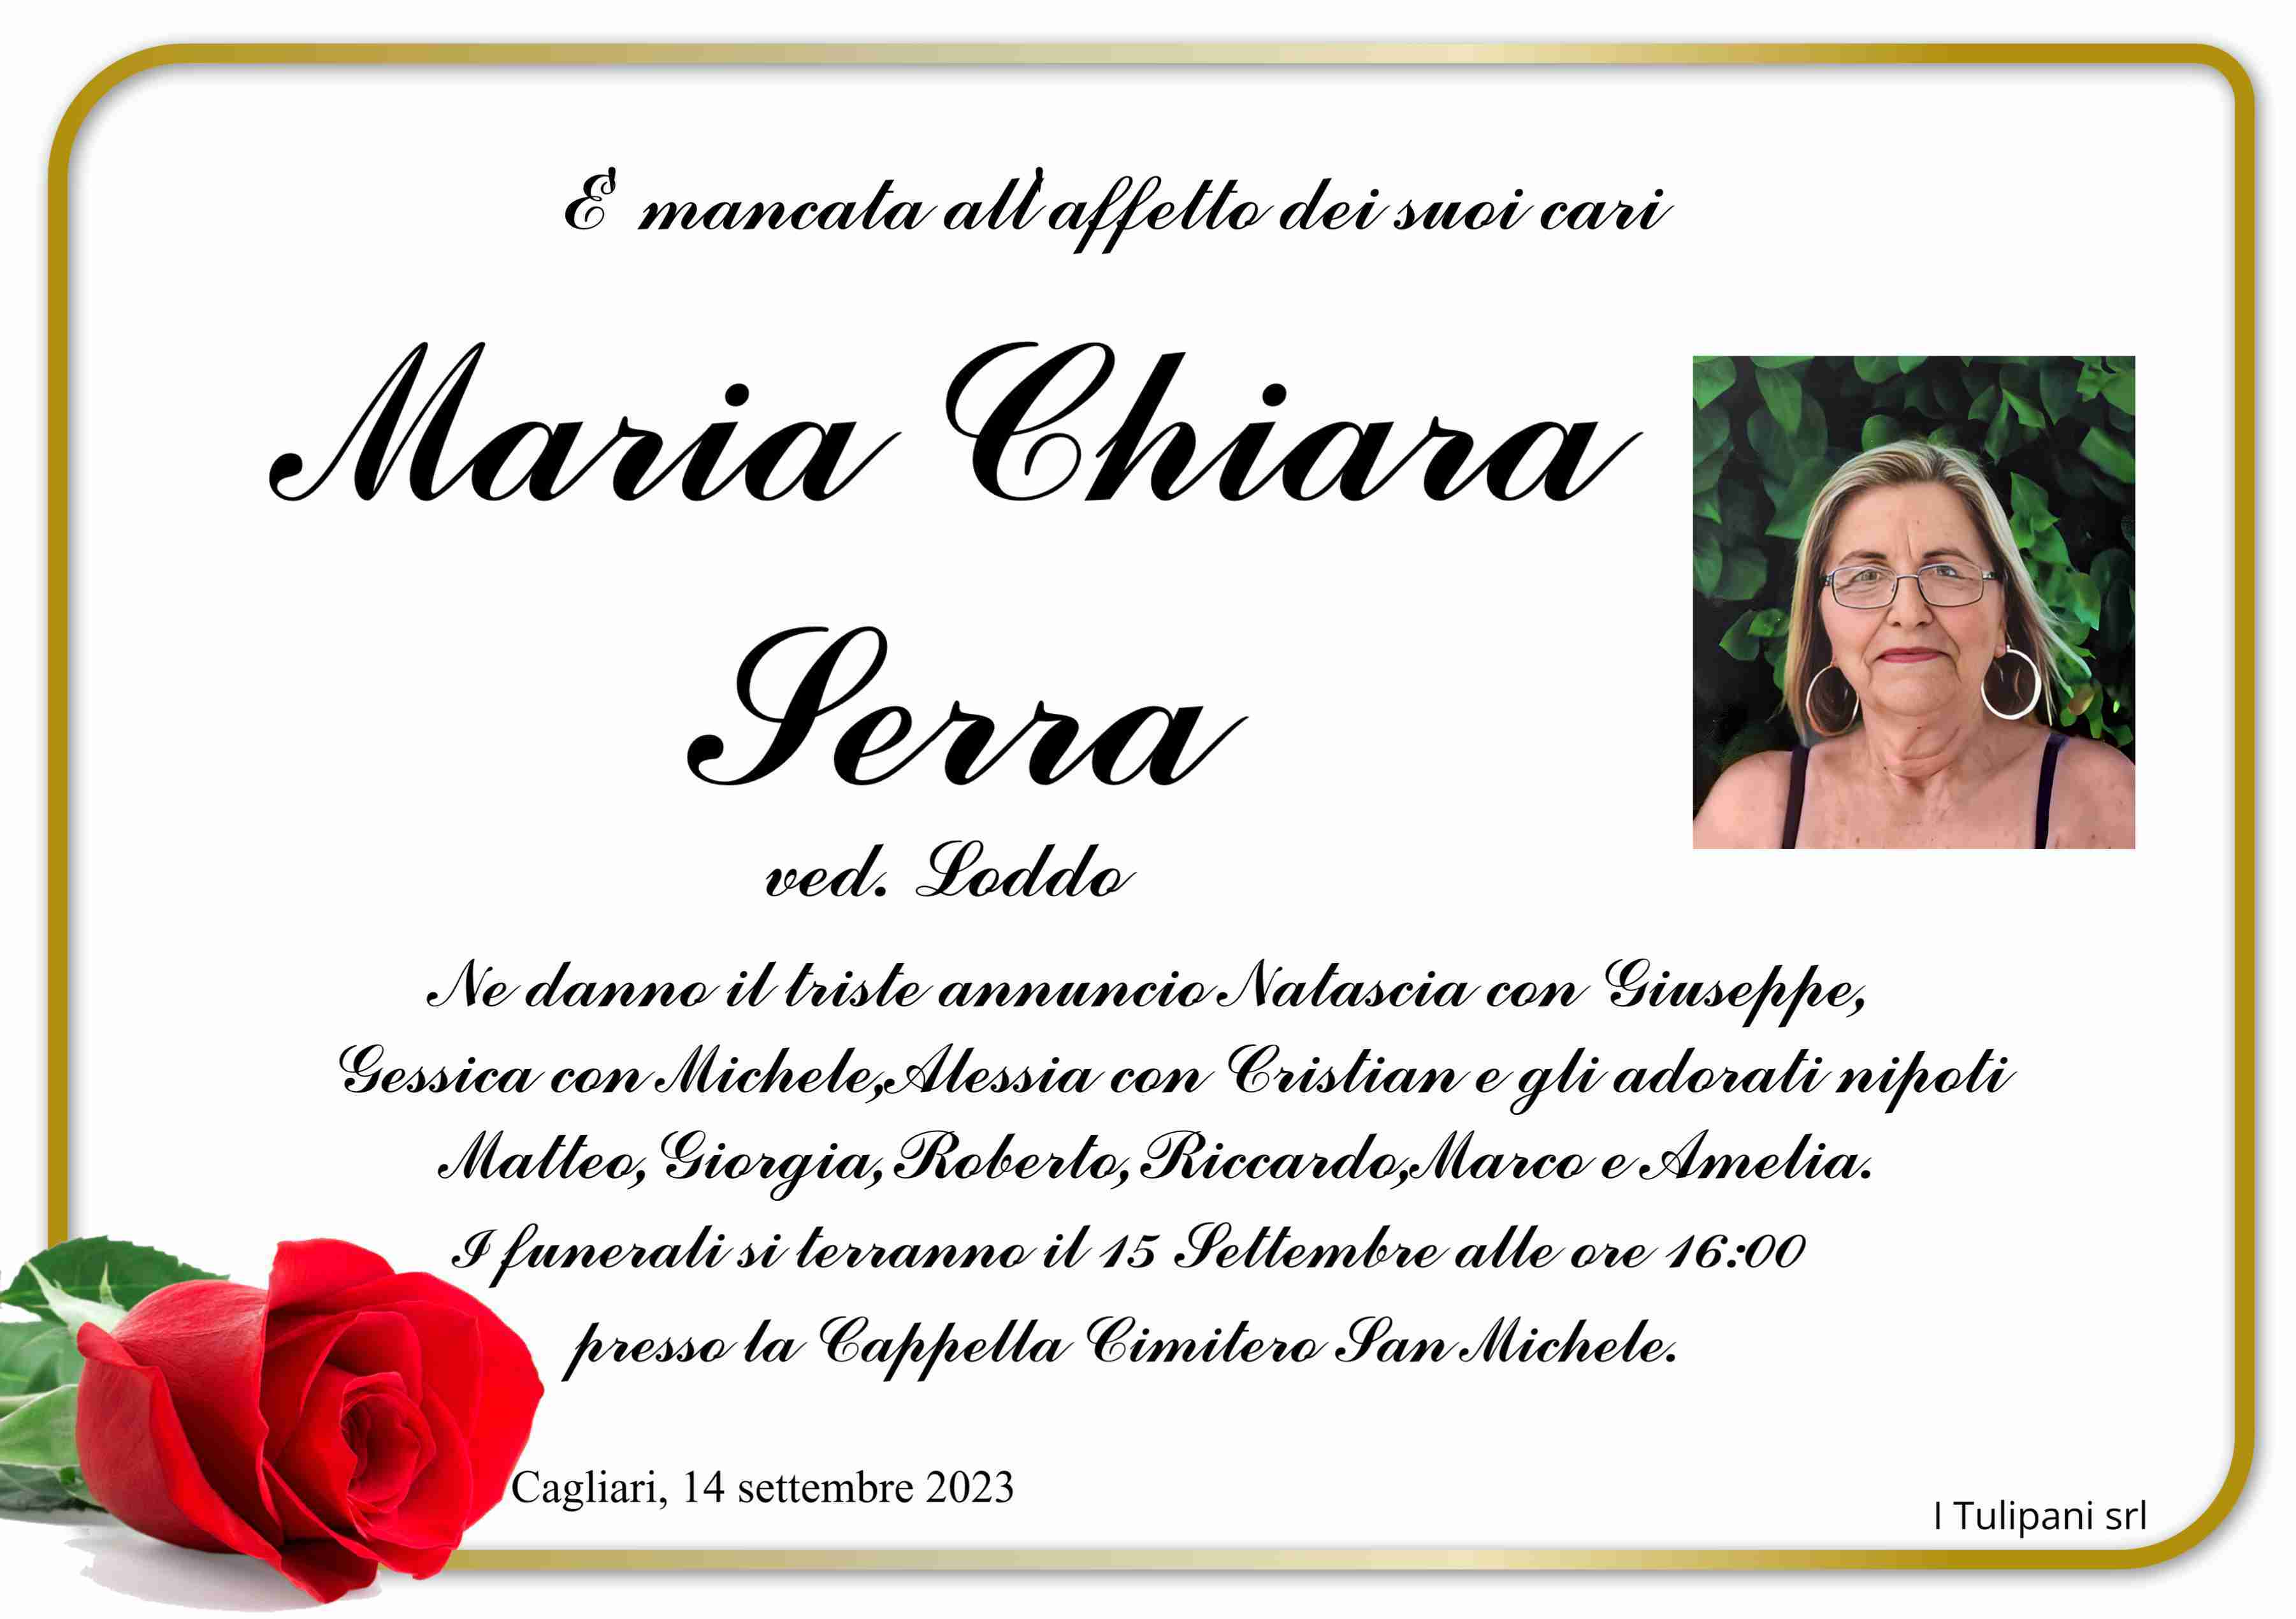 Maria Chiara Serra